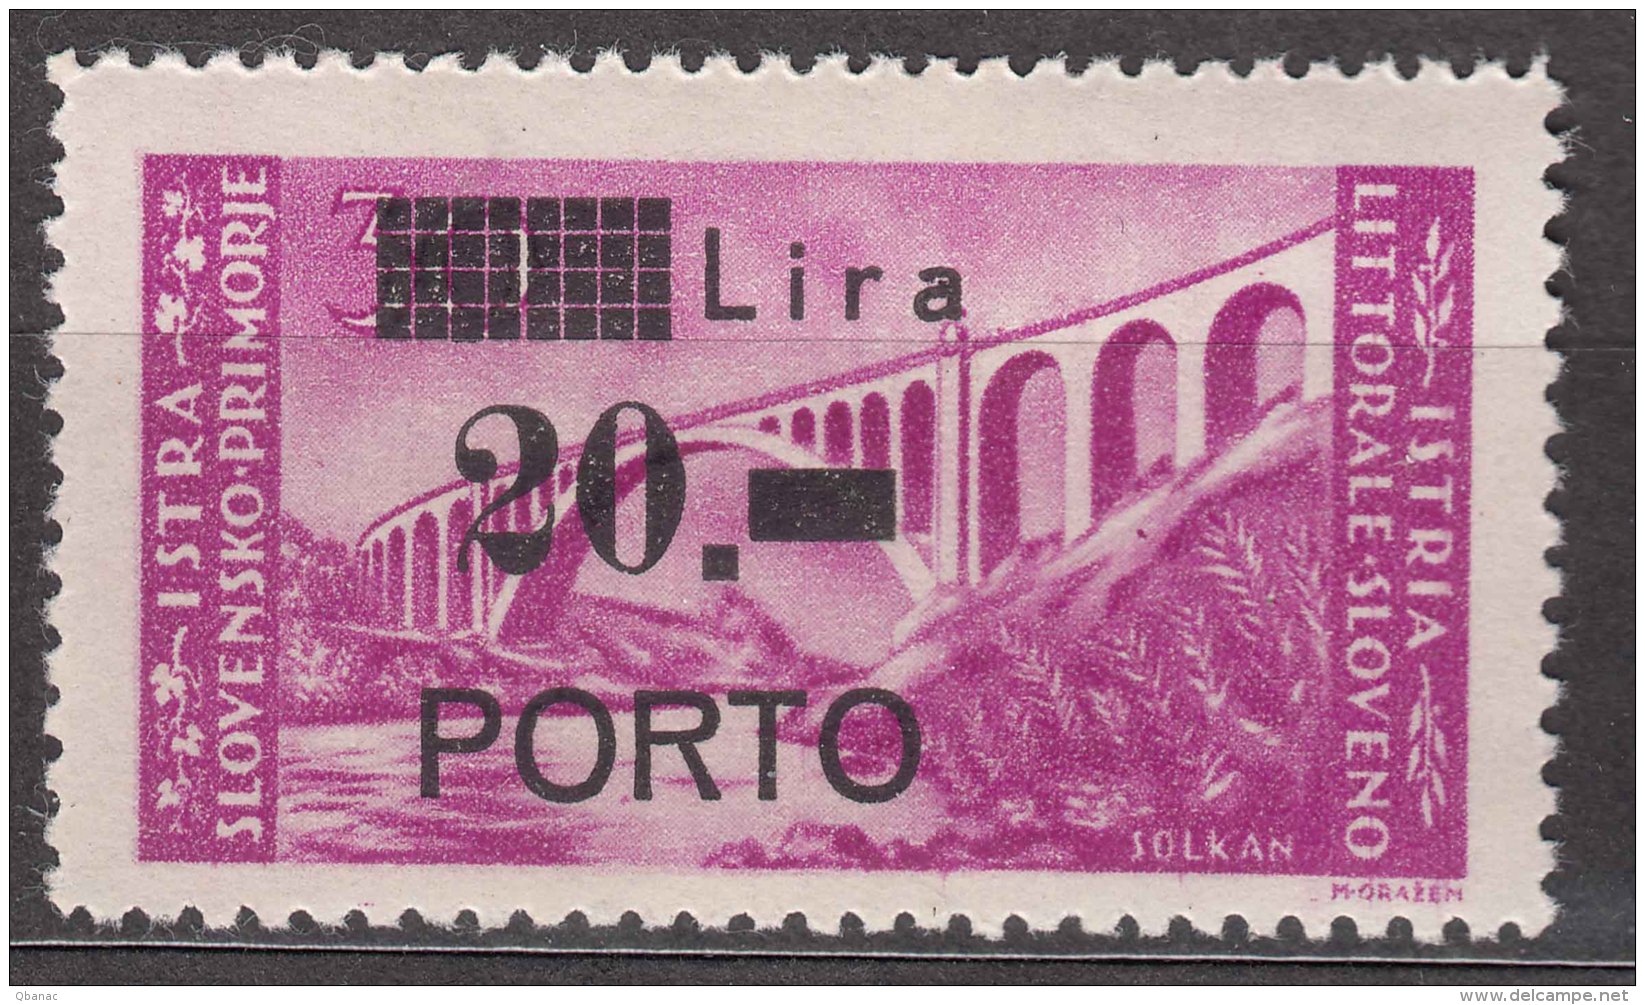 Istria Litorale Yugoslavia Occupation, Porto 1946 Sassone#12 Mint Never Hinged - Yugoslavian Occ.: Istria